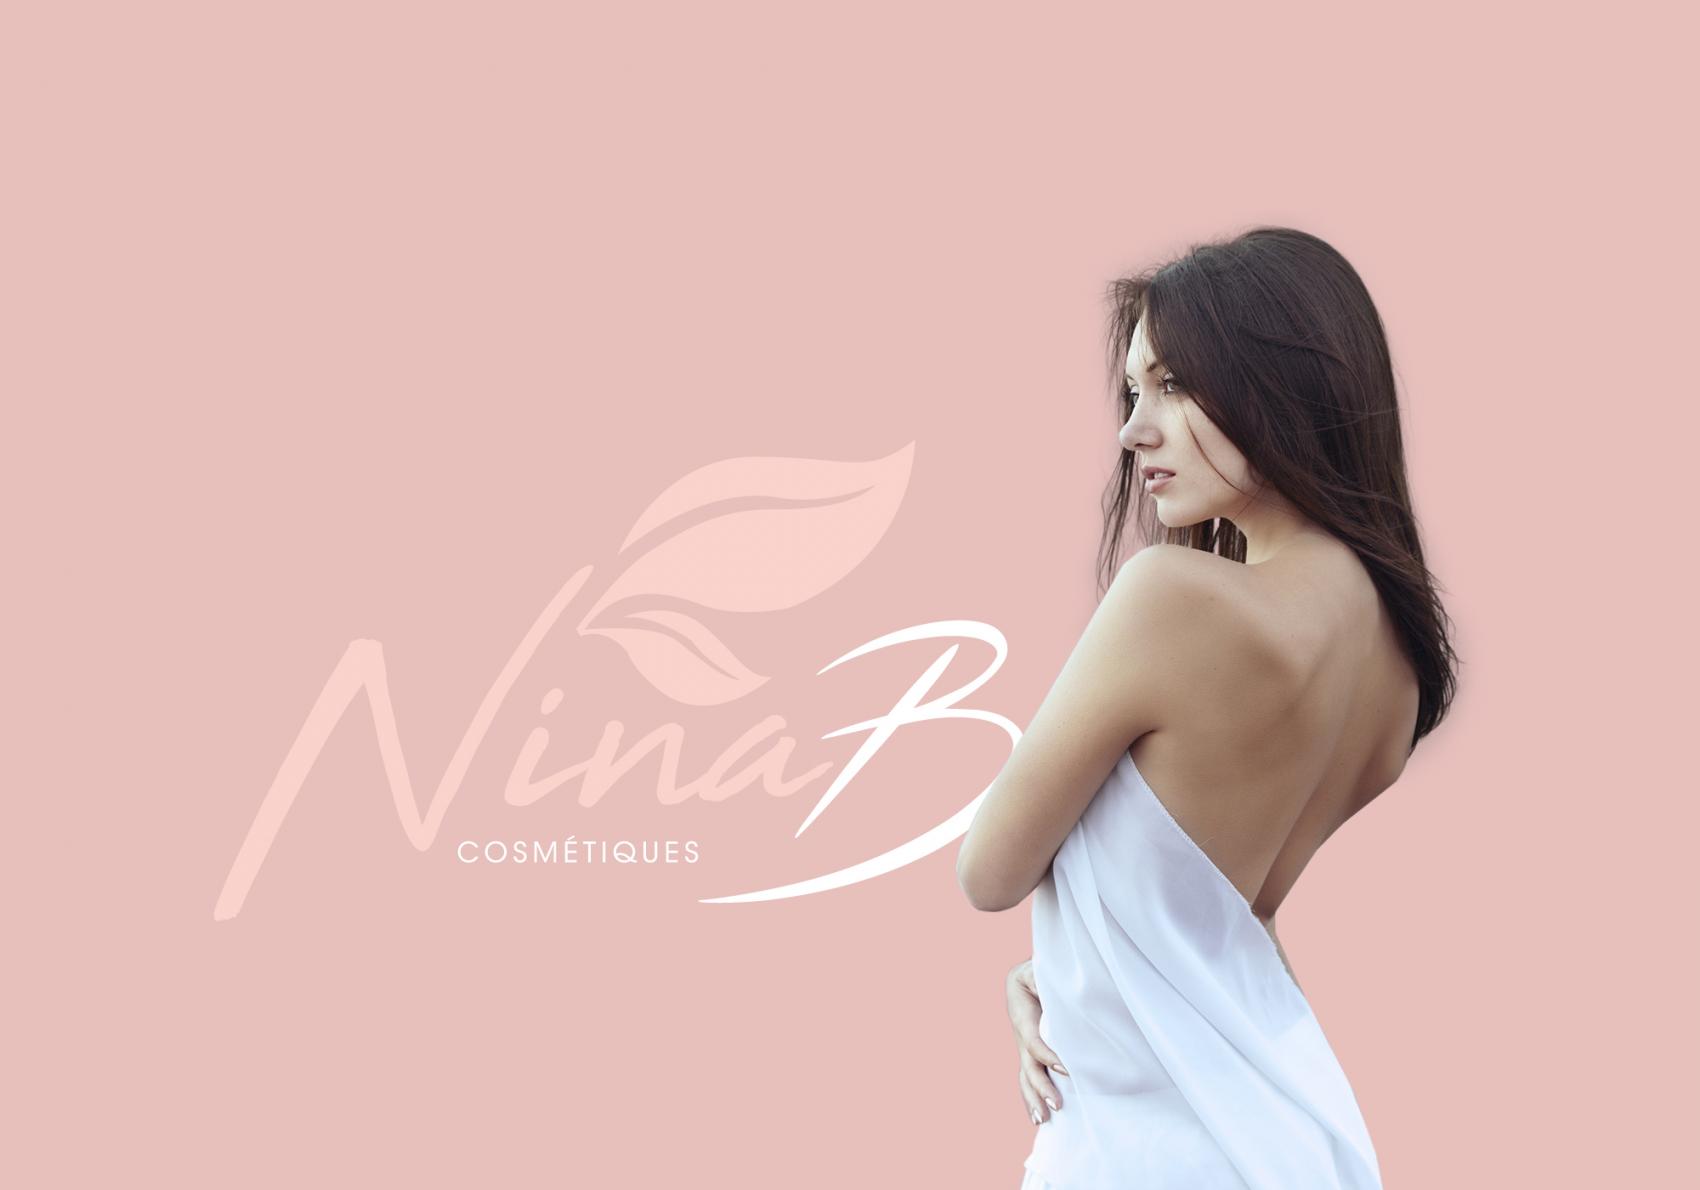 Nina B Cosmétiques : produits cosmétiques 100% naturels - Fabrication française 